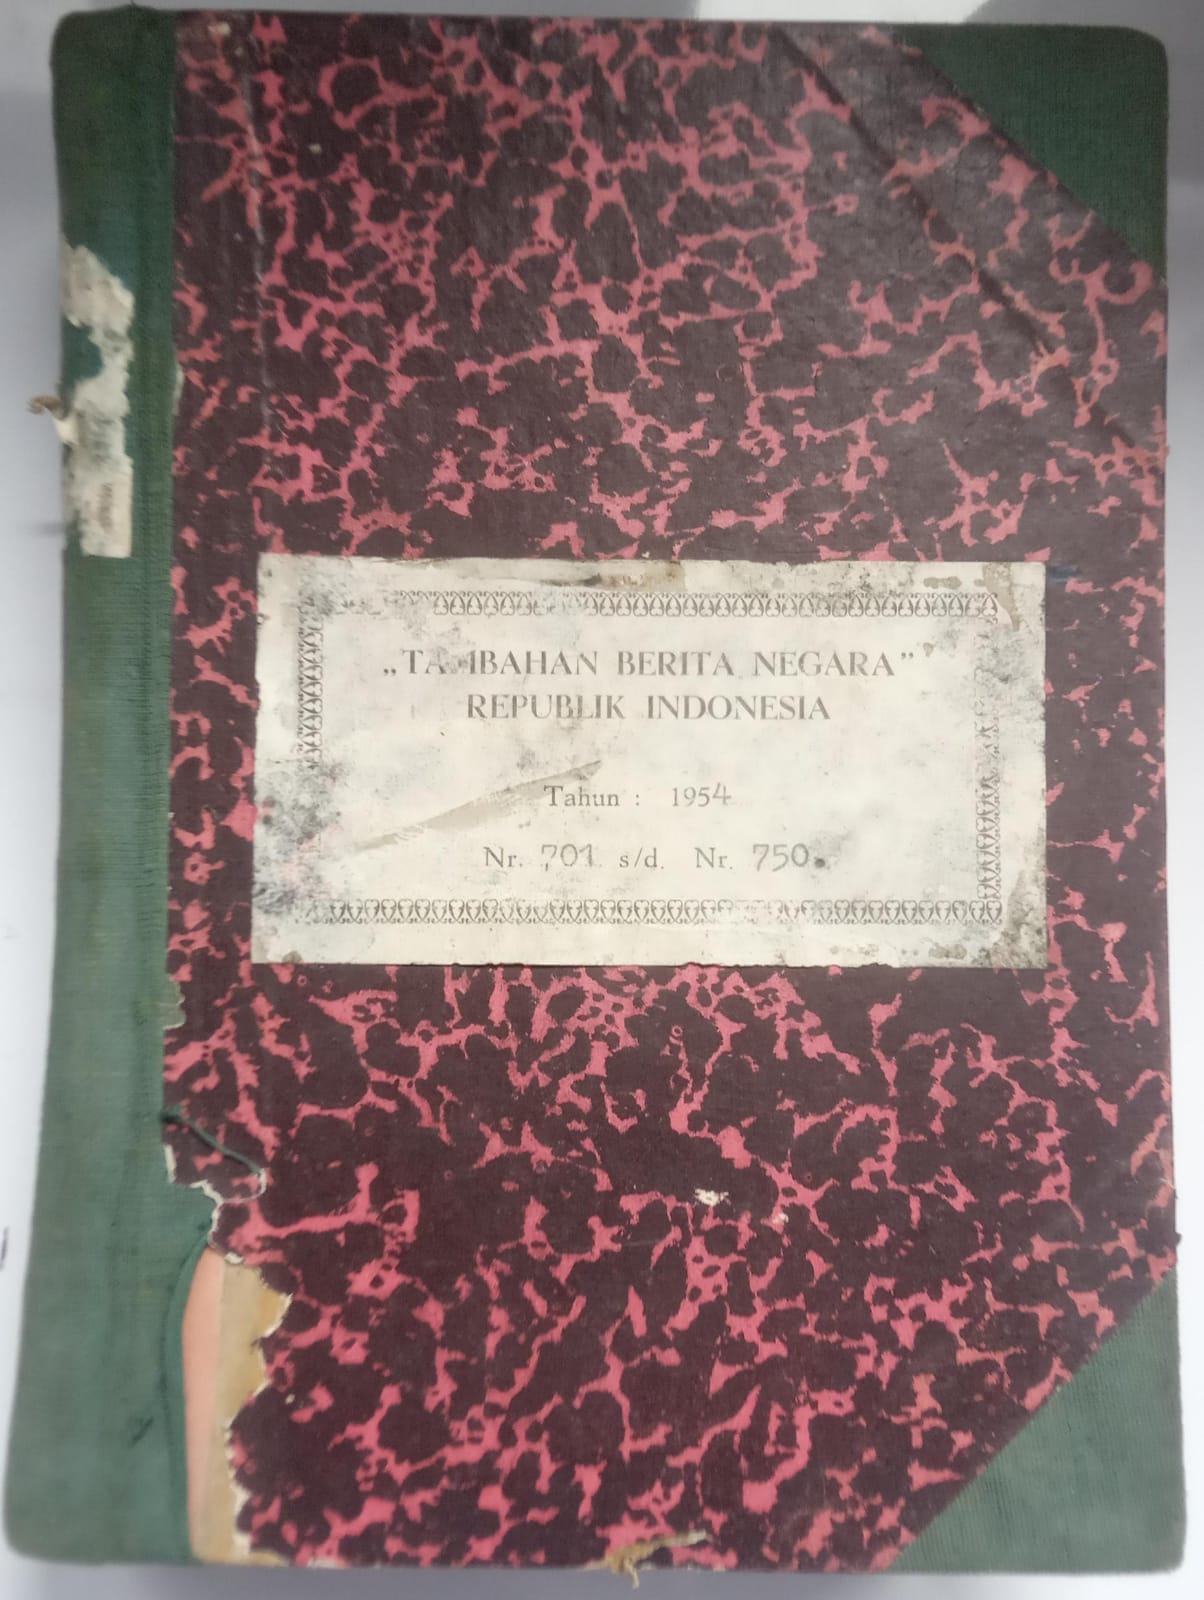 Tambahan Berita Negara Republik Indonesia Tahun : 1954 Nr. 701 s/d Nr. 750